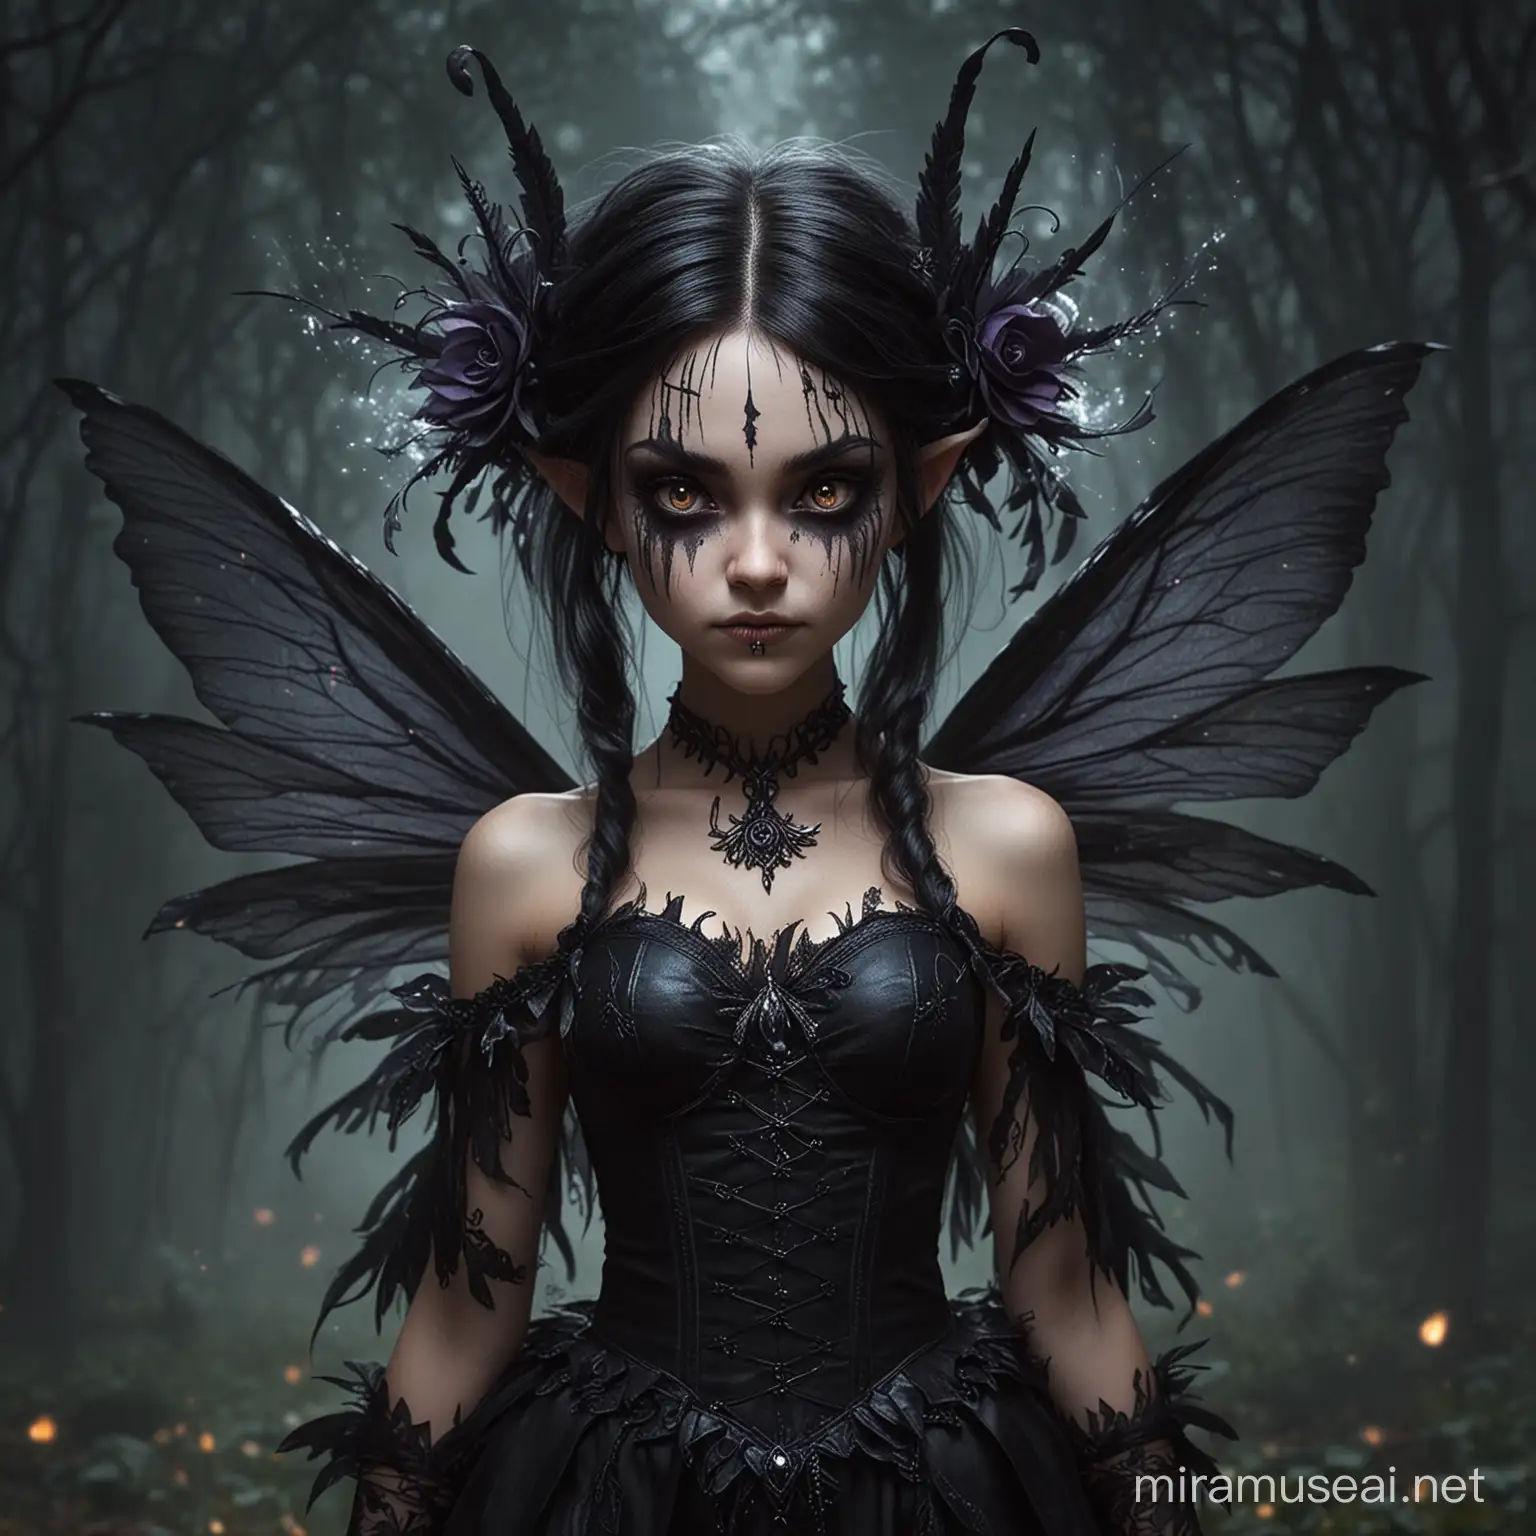 Sinister Dark Feywild Fairy in the Shadows